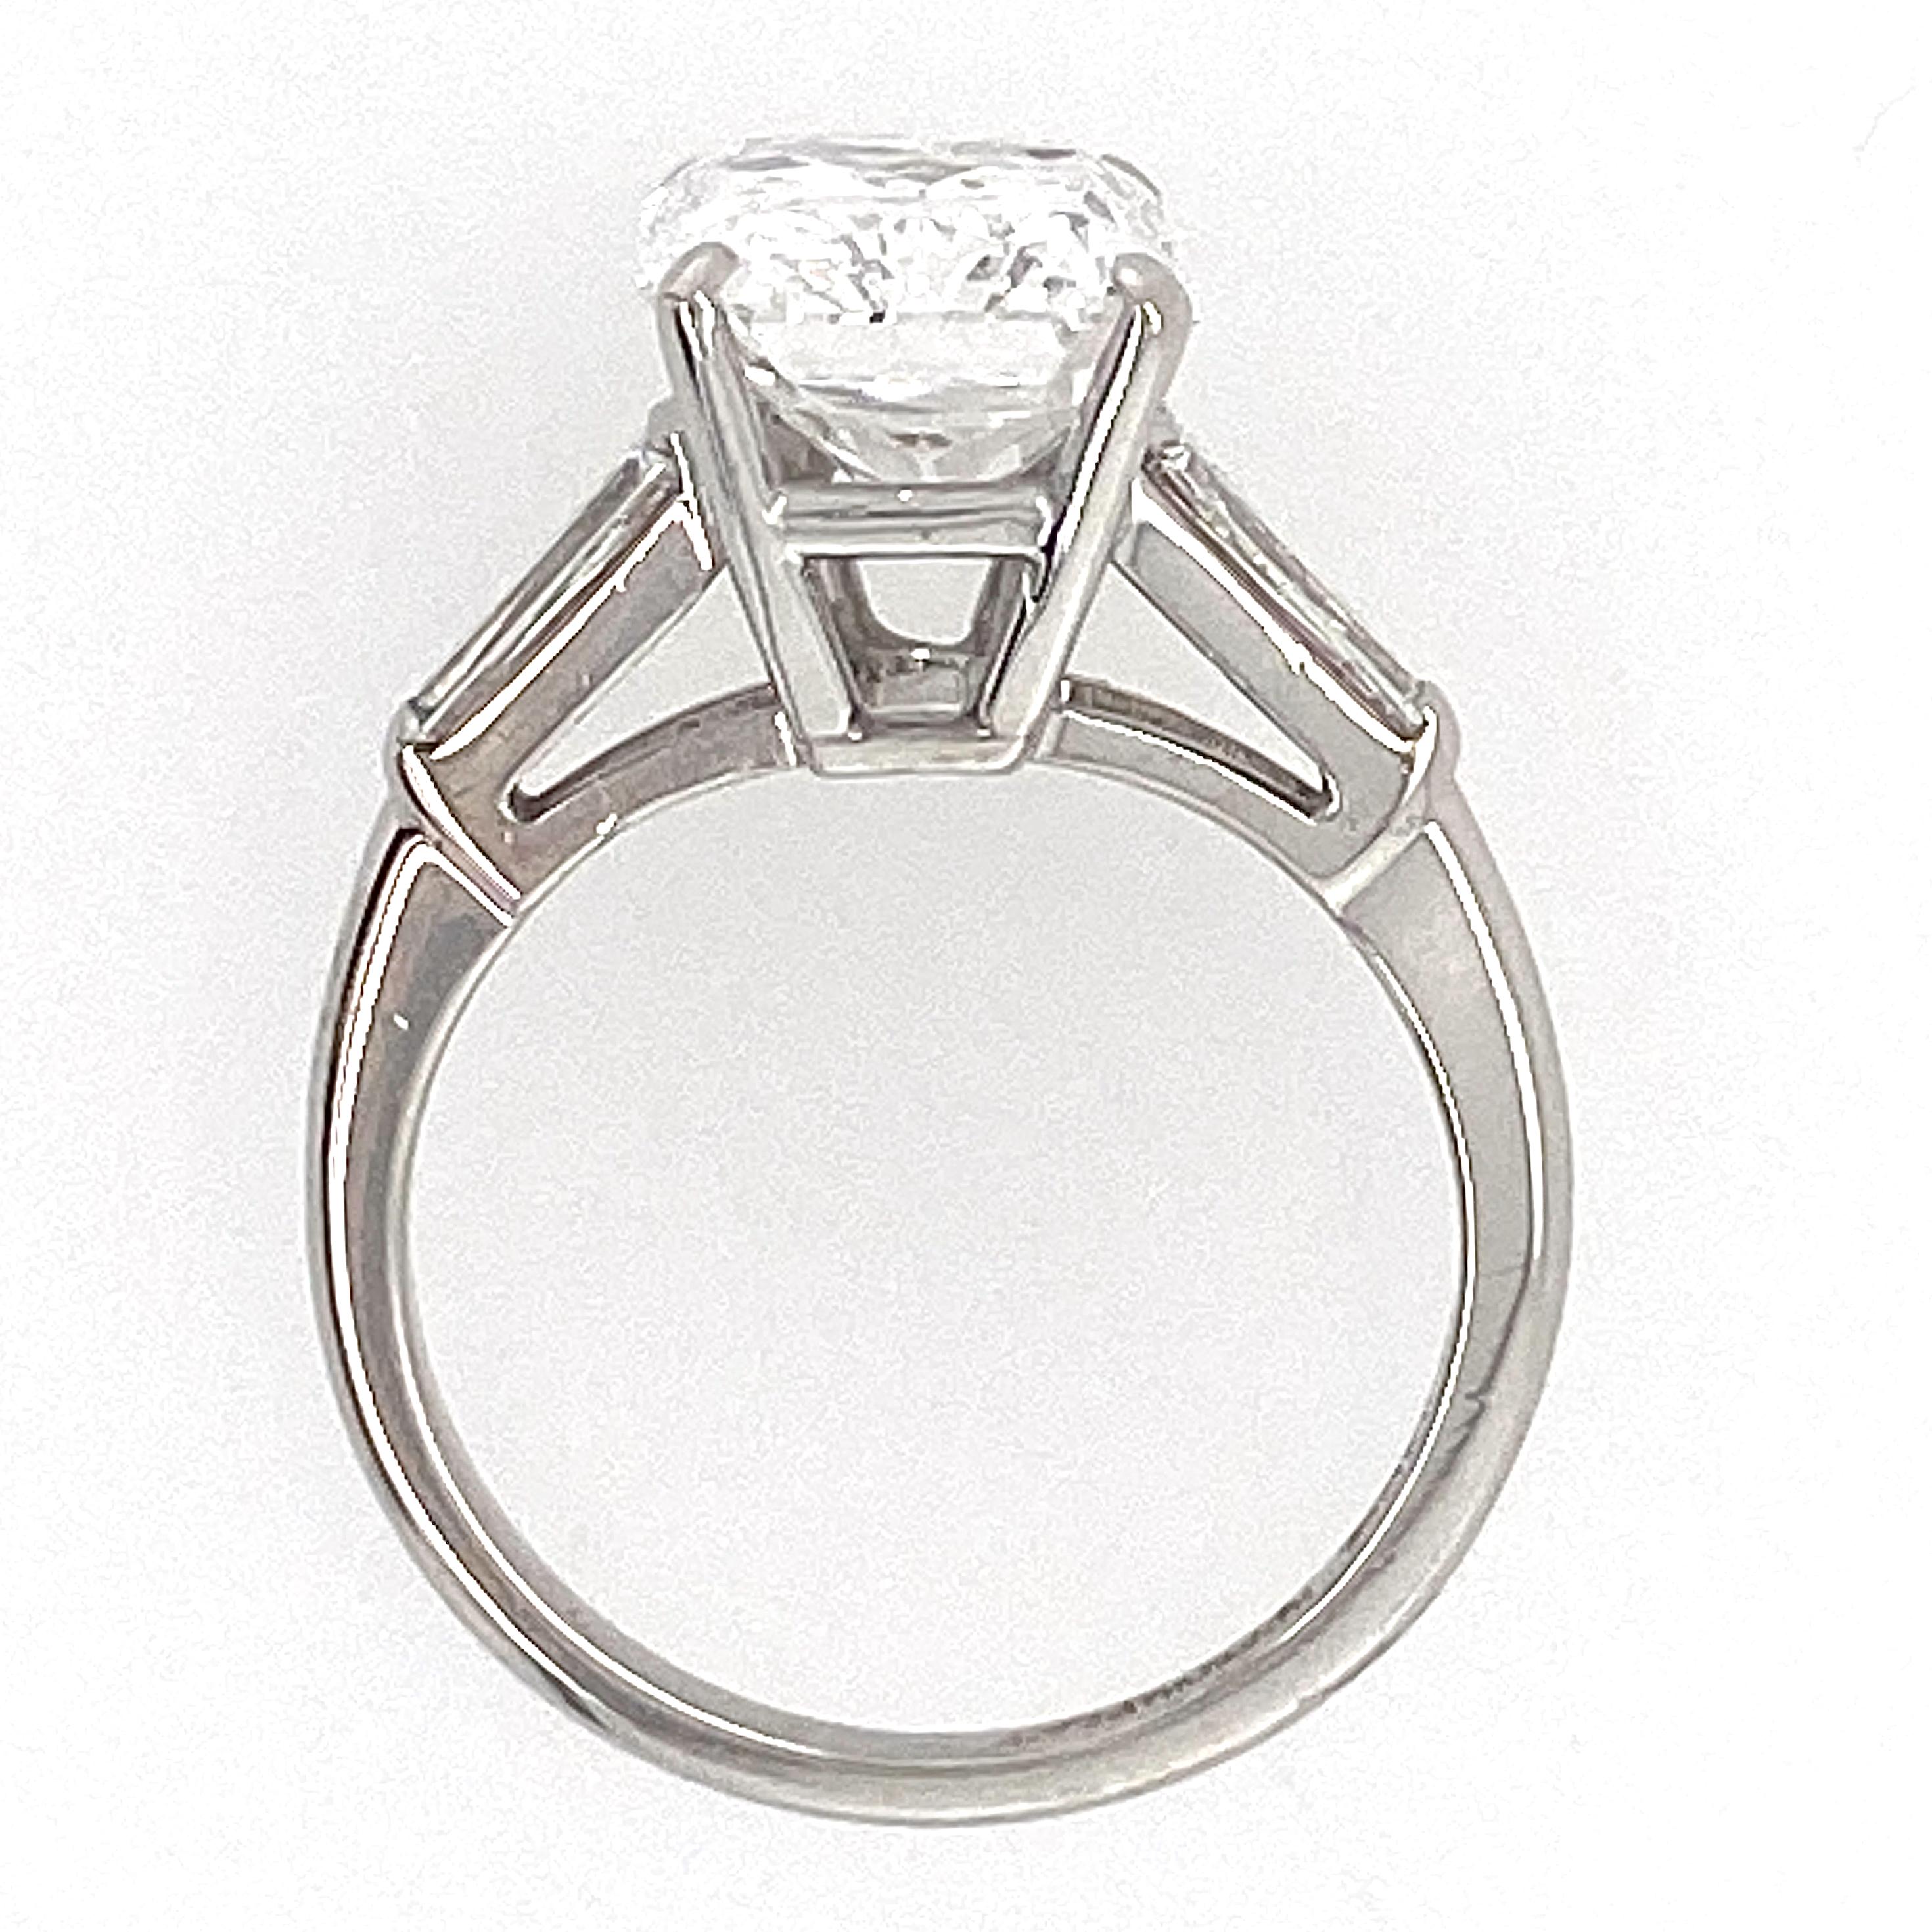 4.06 Carat E-VVS1 GIA Certified Radiant Cut Diamond in Deco-Era Platinum Ring 14